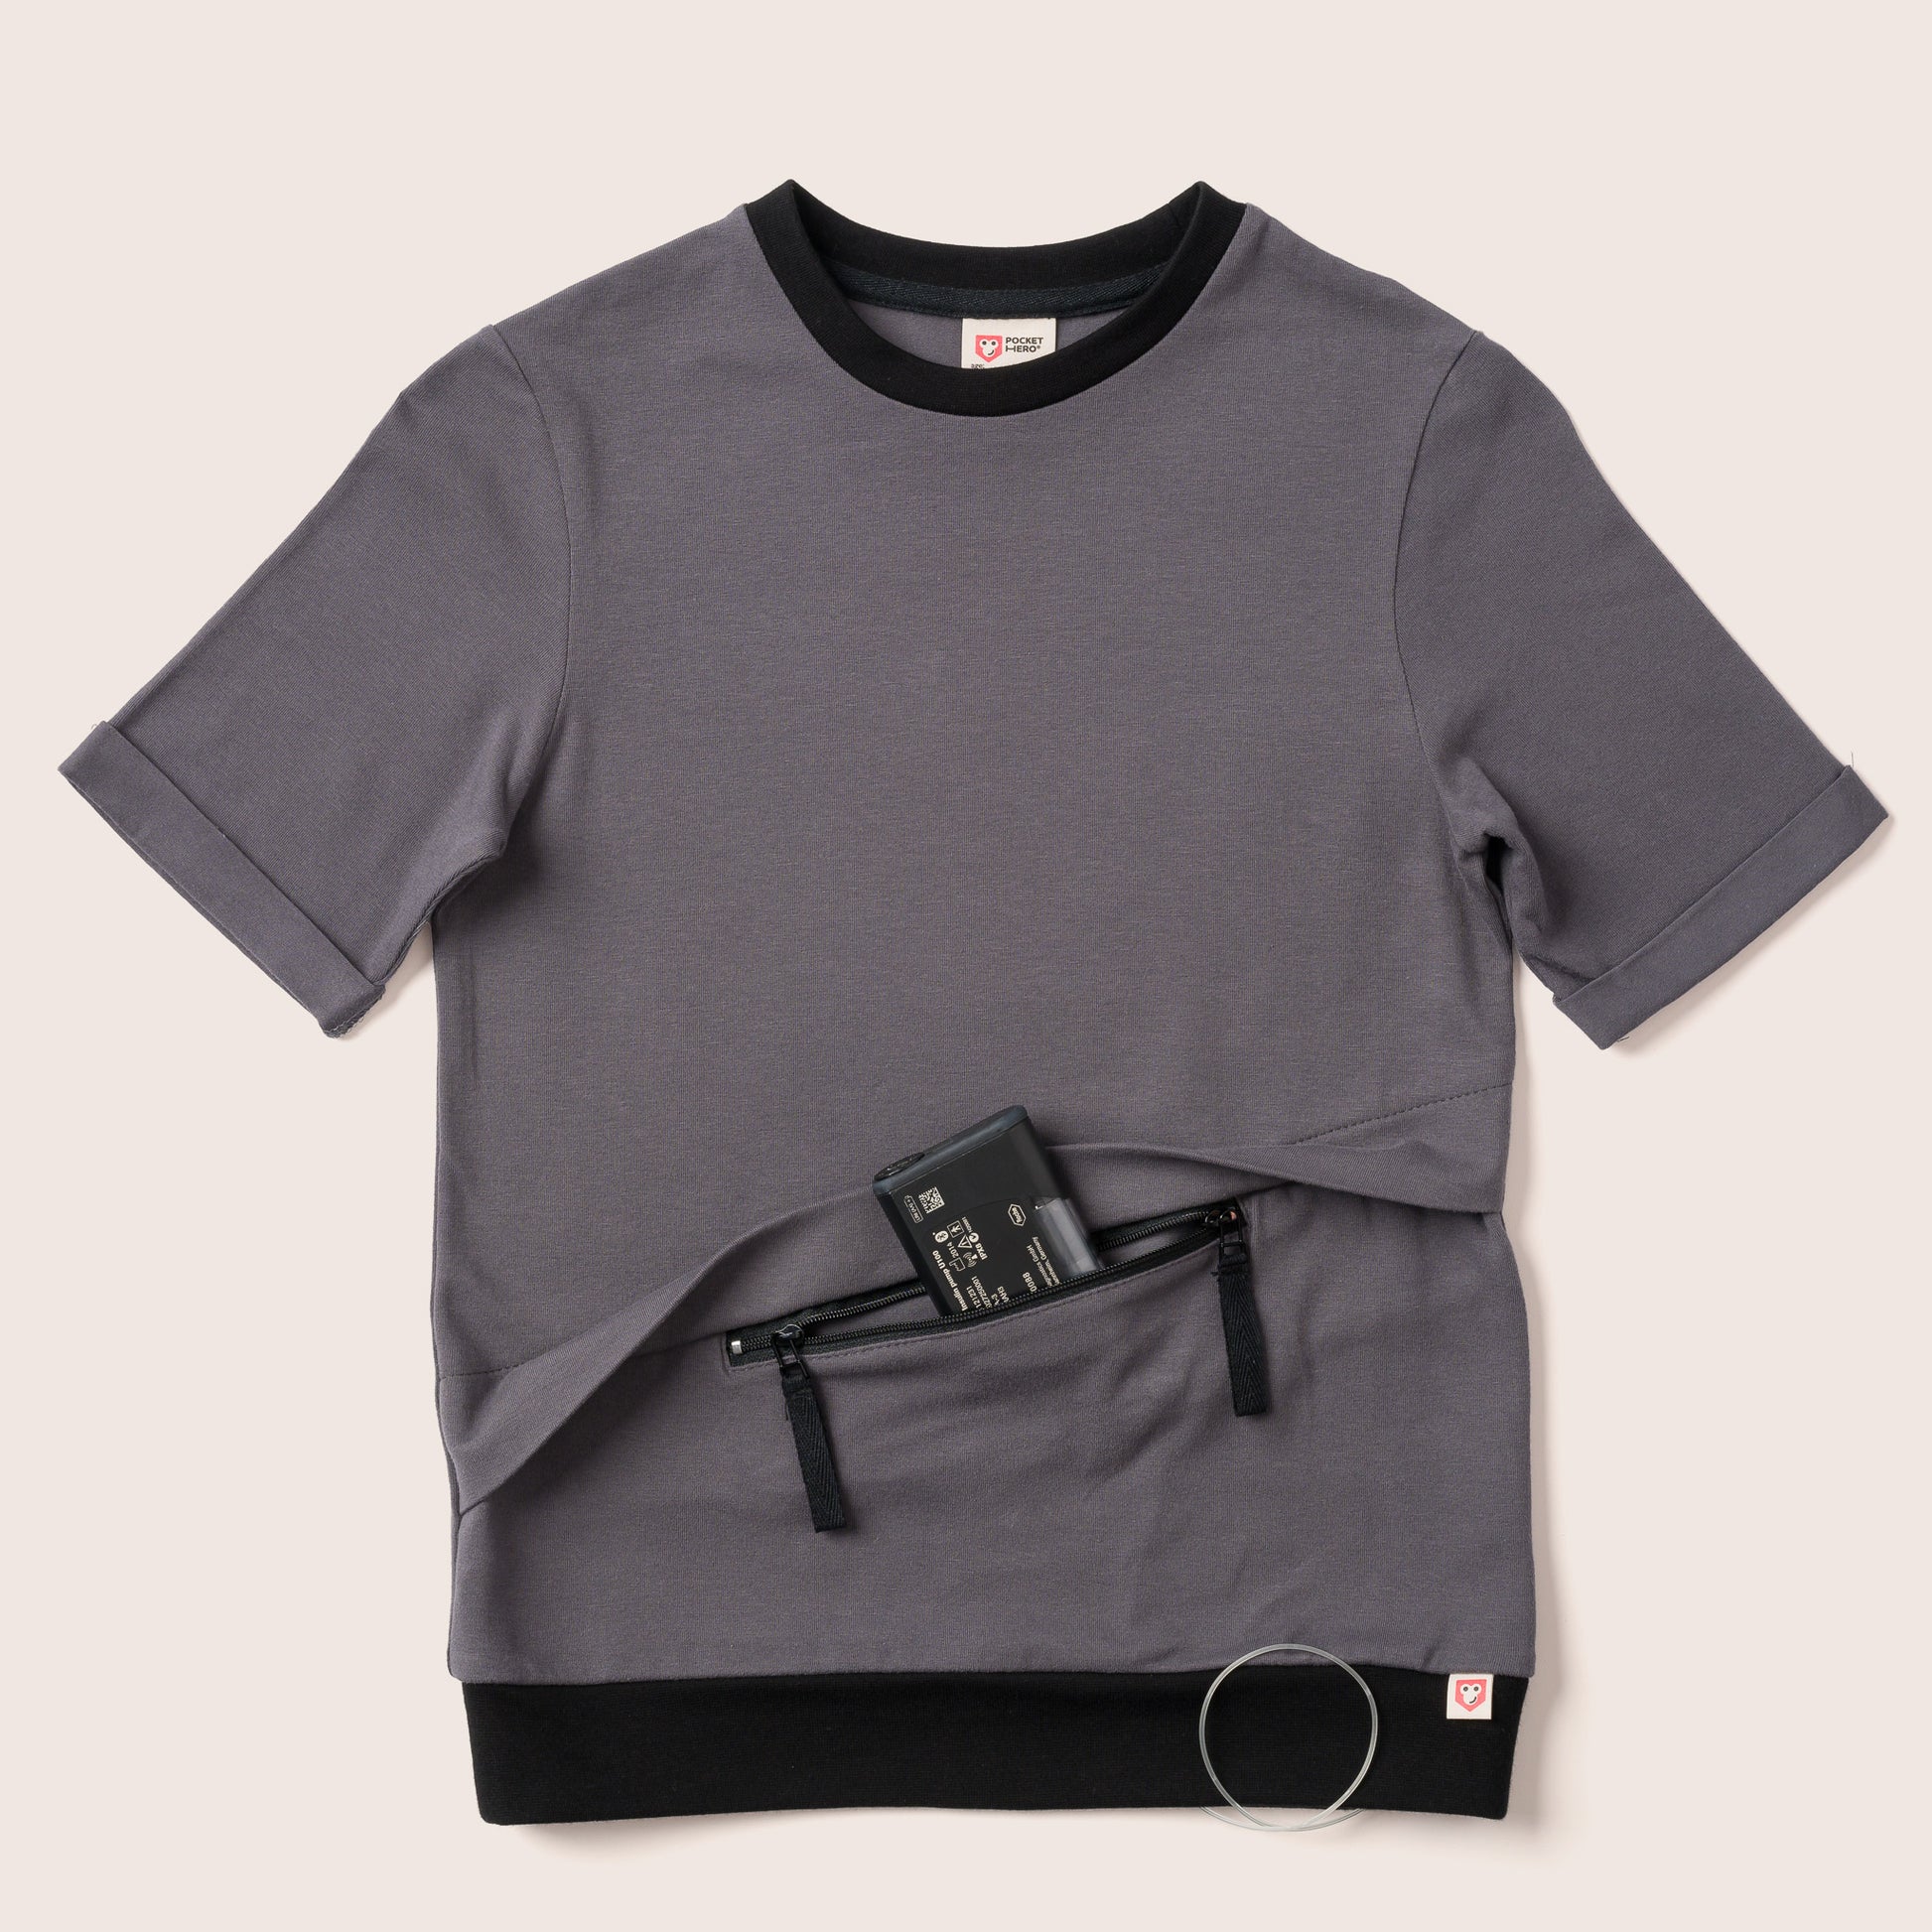 Type 1 Diabetes Clothing - Short Sleeve T-shirt Grey | Our Pocket Hero